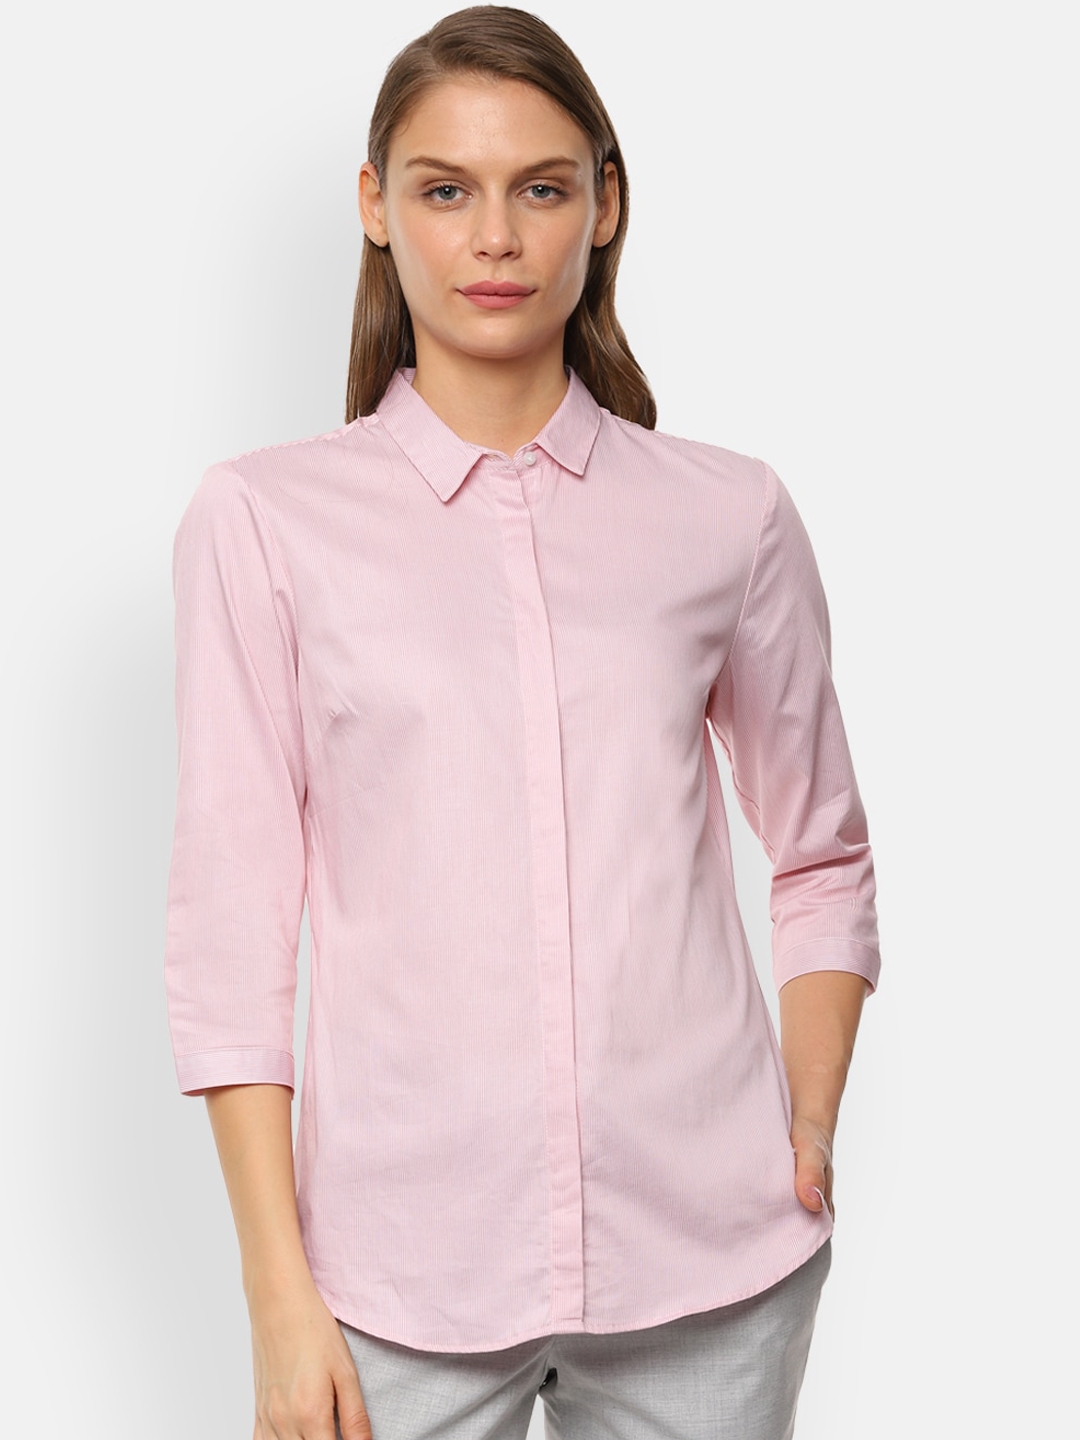 Van Heusen Woman Pink Solid Formal Shirt